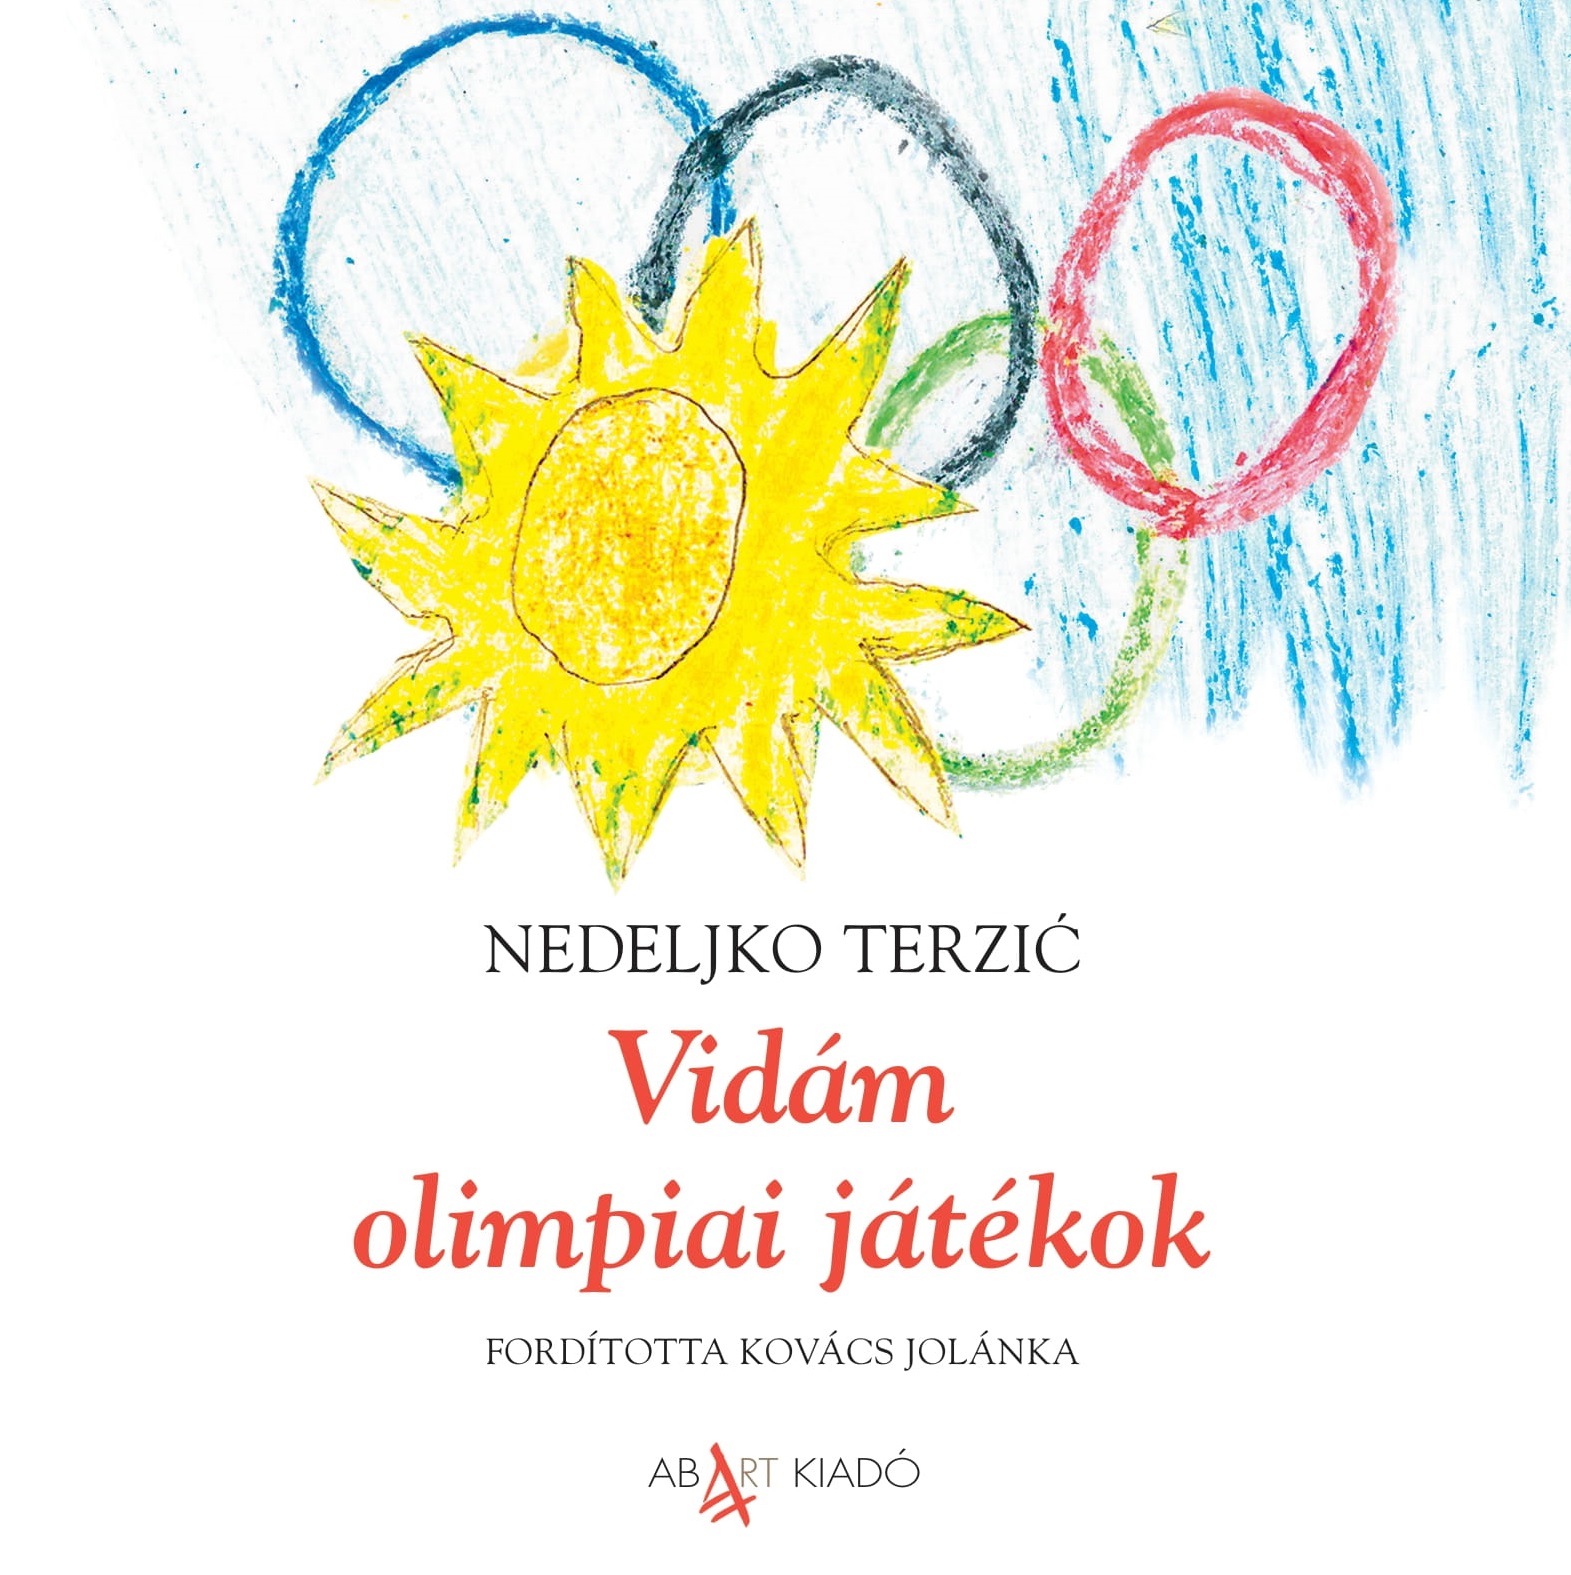 Nedeljko Terzic - Vidám olimpiai játékok